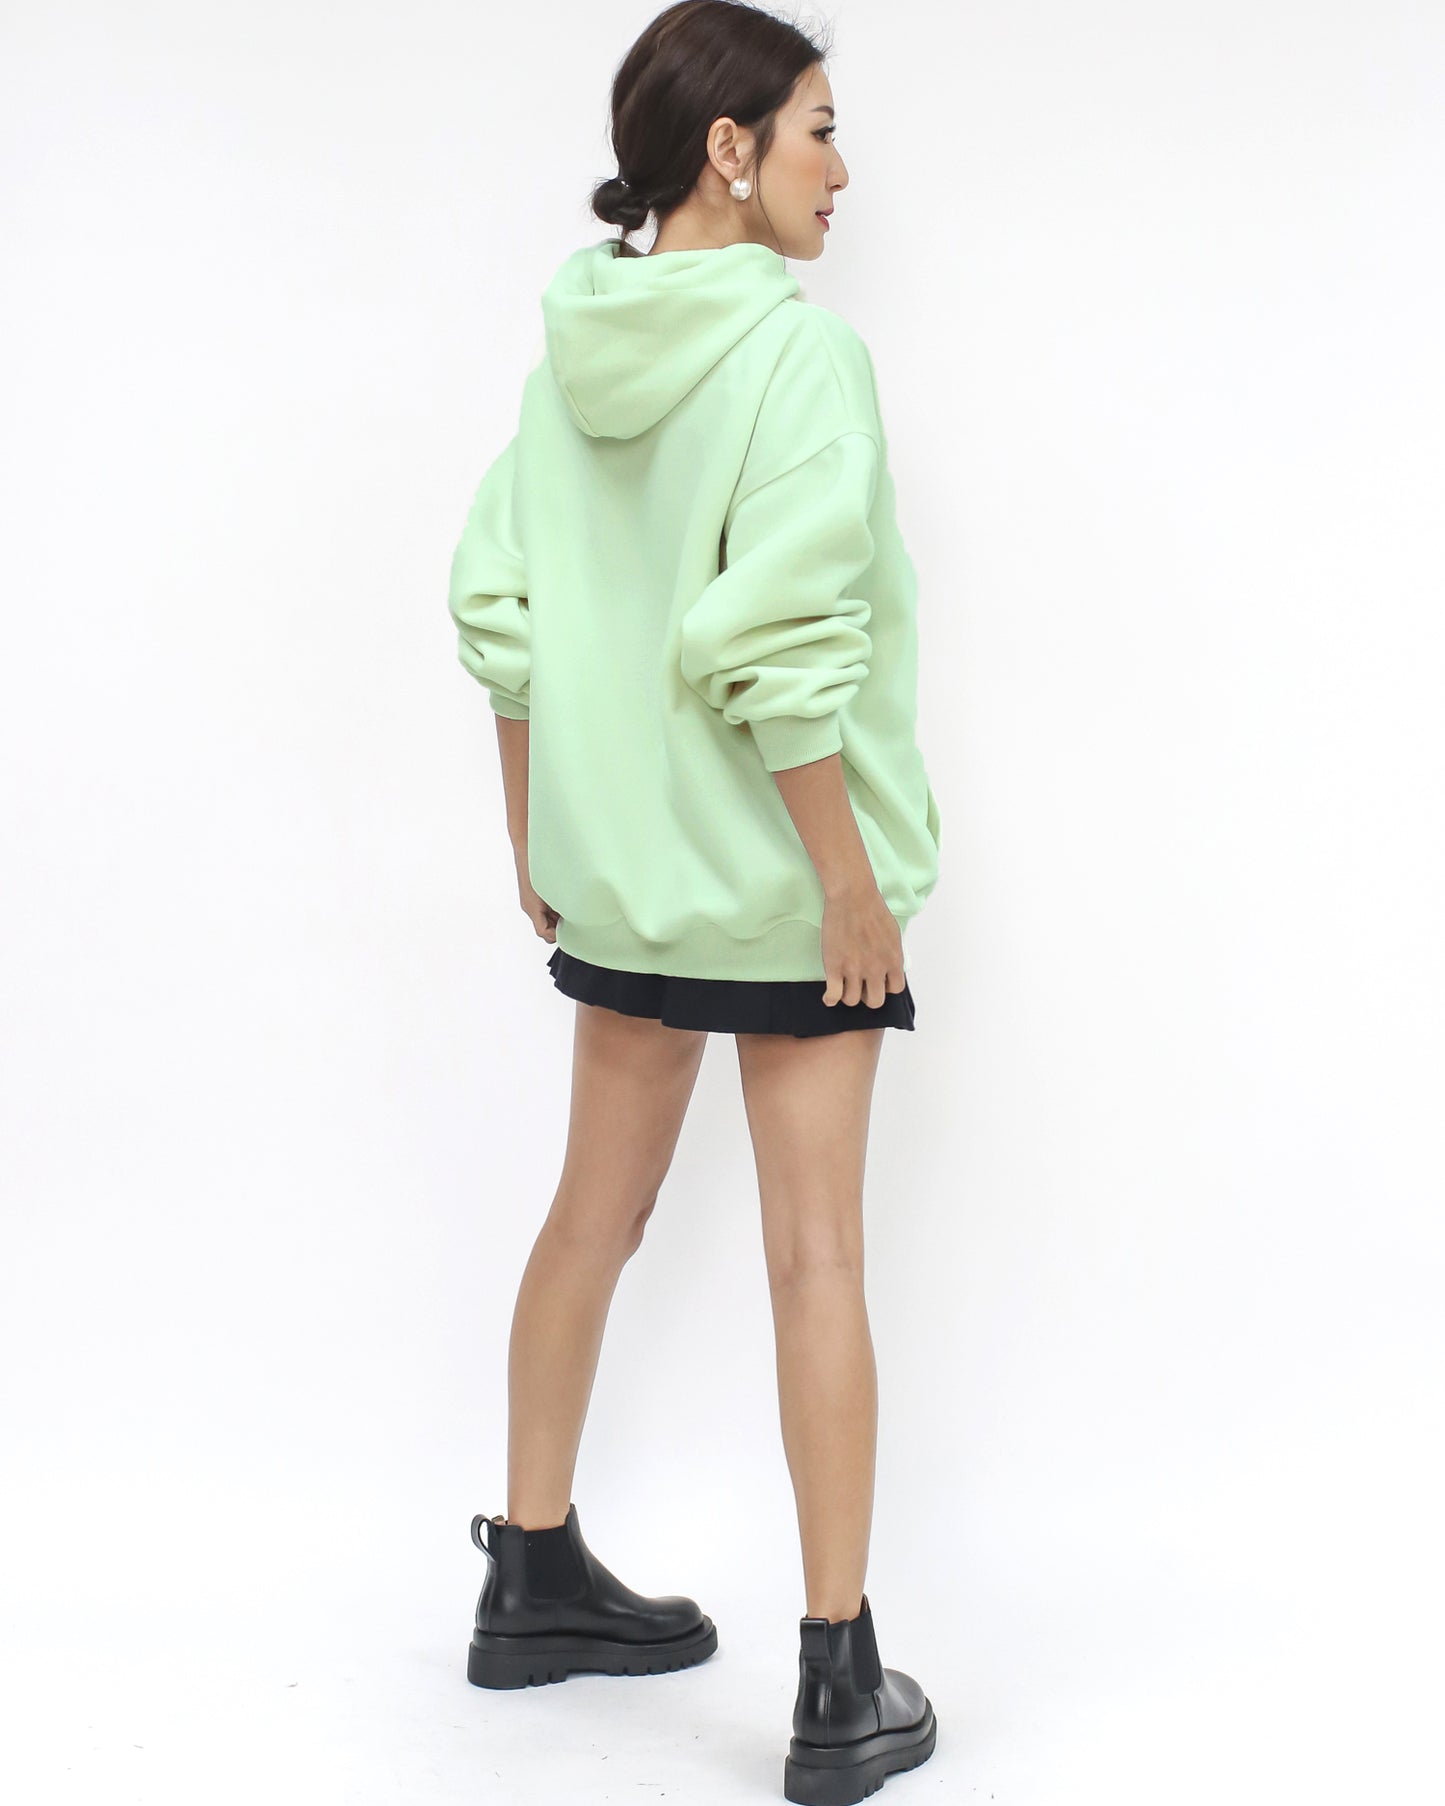 light green hoodie w/ green rope straps sweatshirt *pre-order*